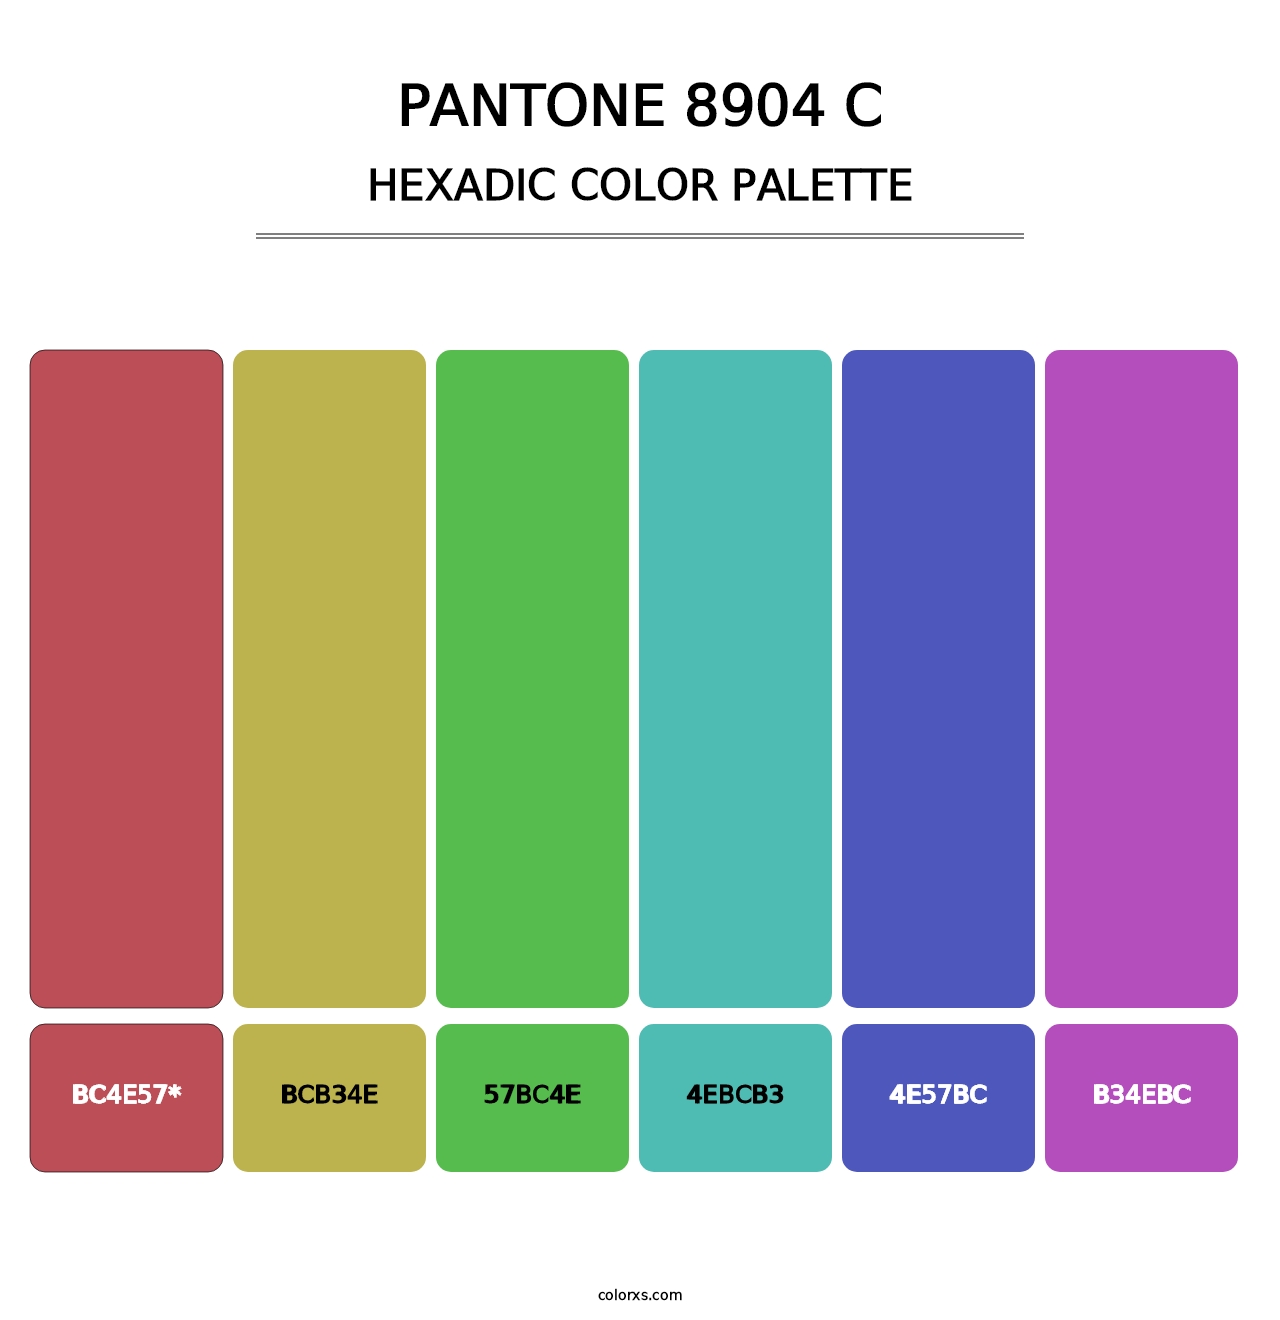 PANTONE 8904 C - Hexadic Color Palette